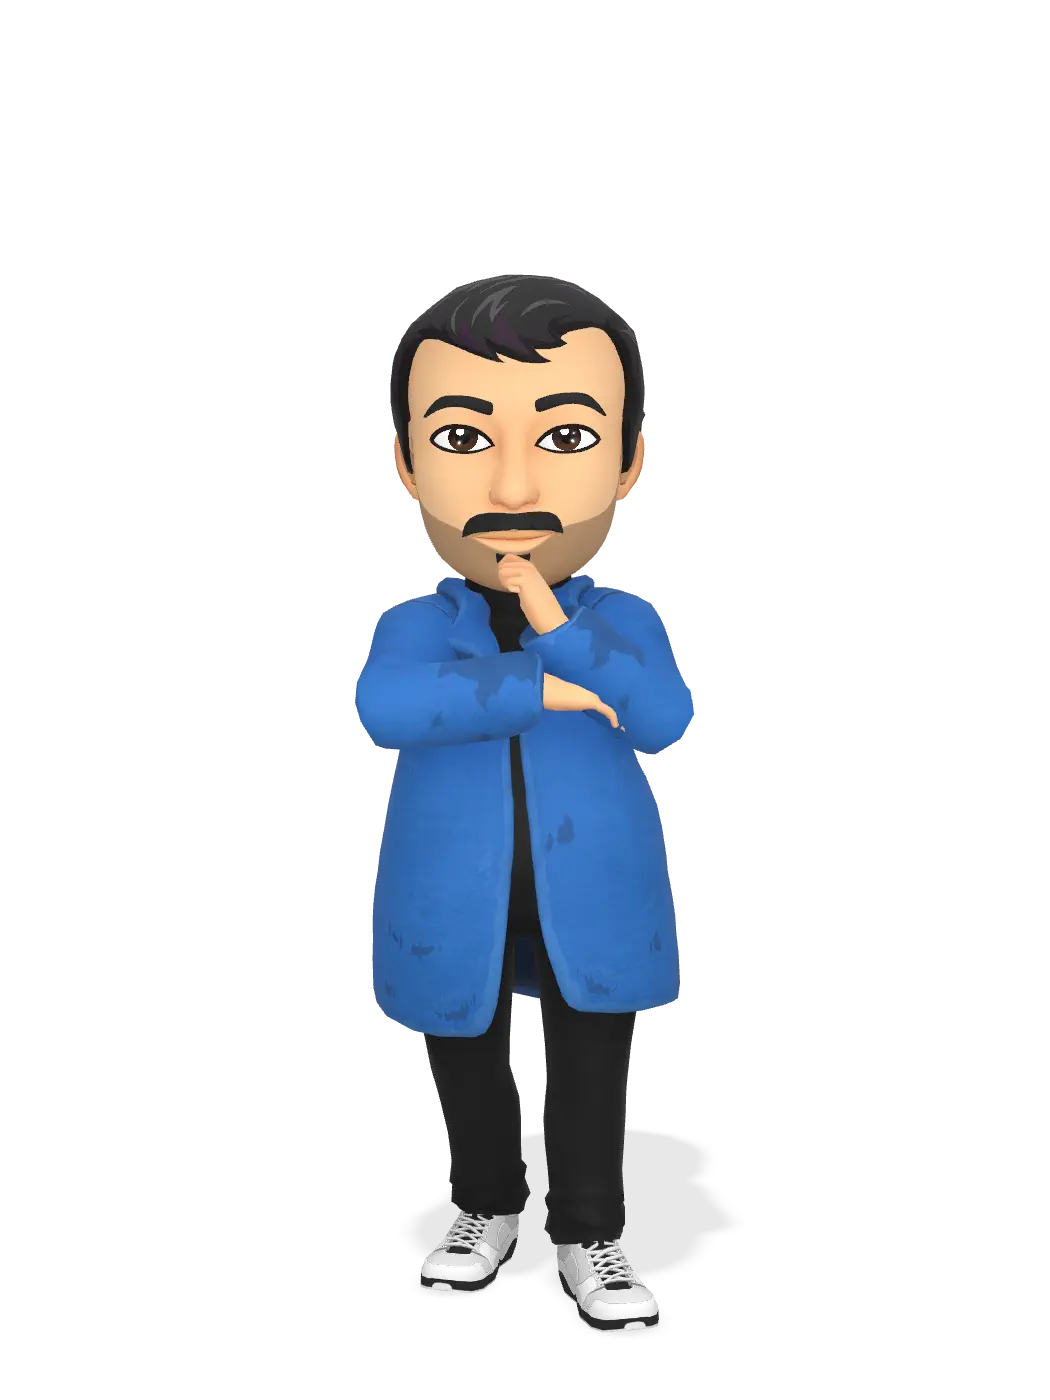 3D Bitmoji for aaa987611 avatar